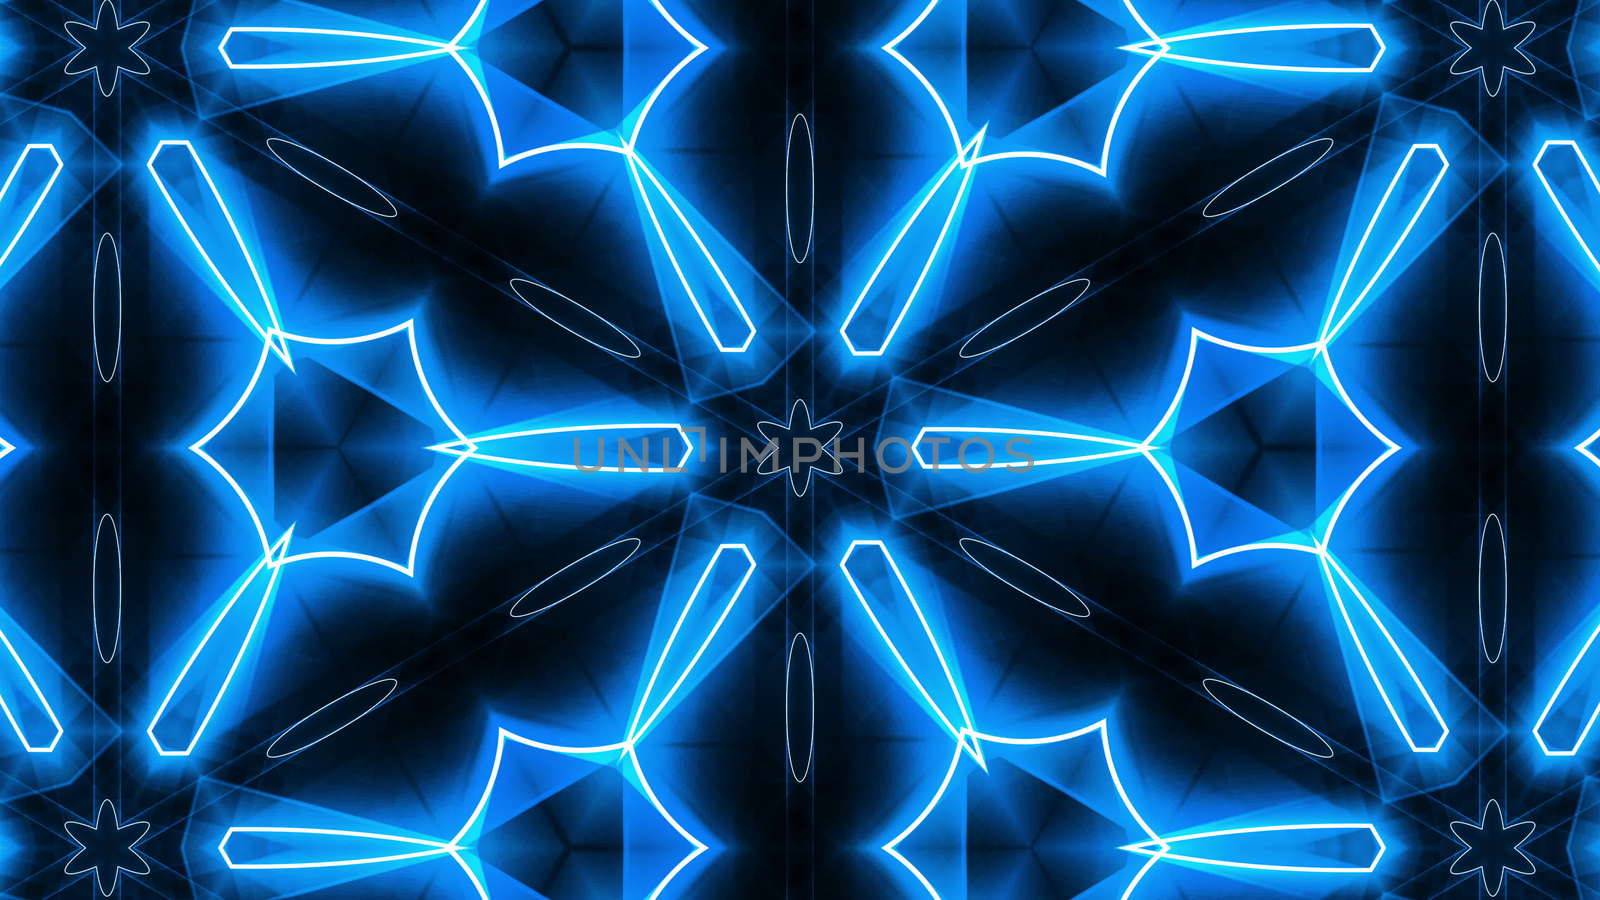 VJ Fractal blue kaleidoscopic background by nolimit046